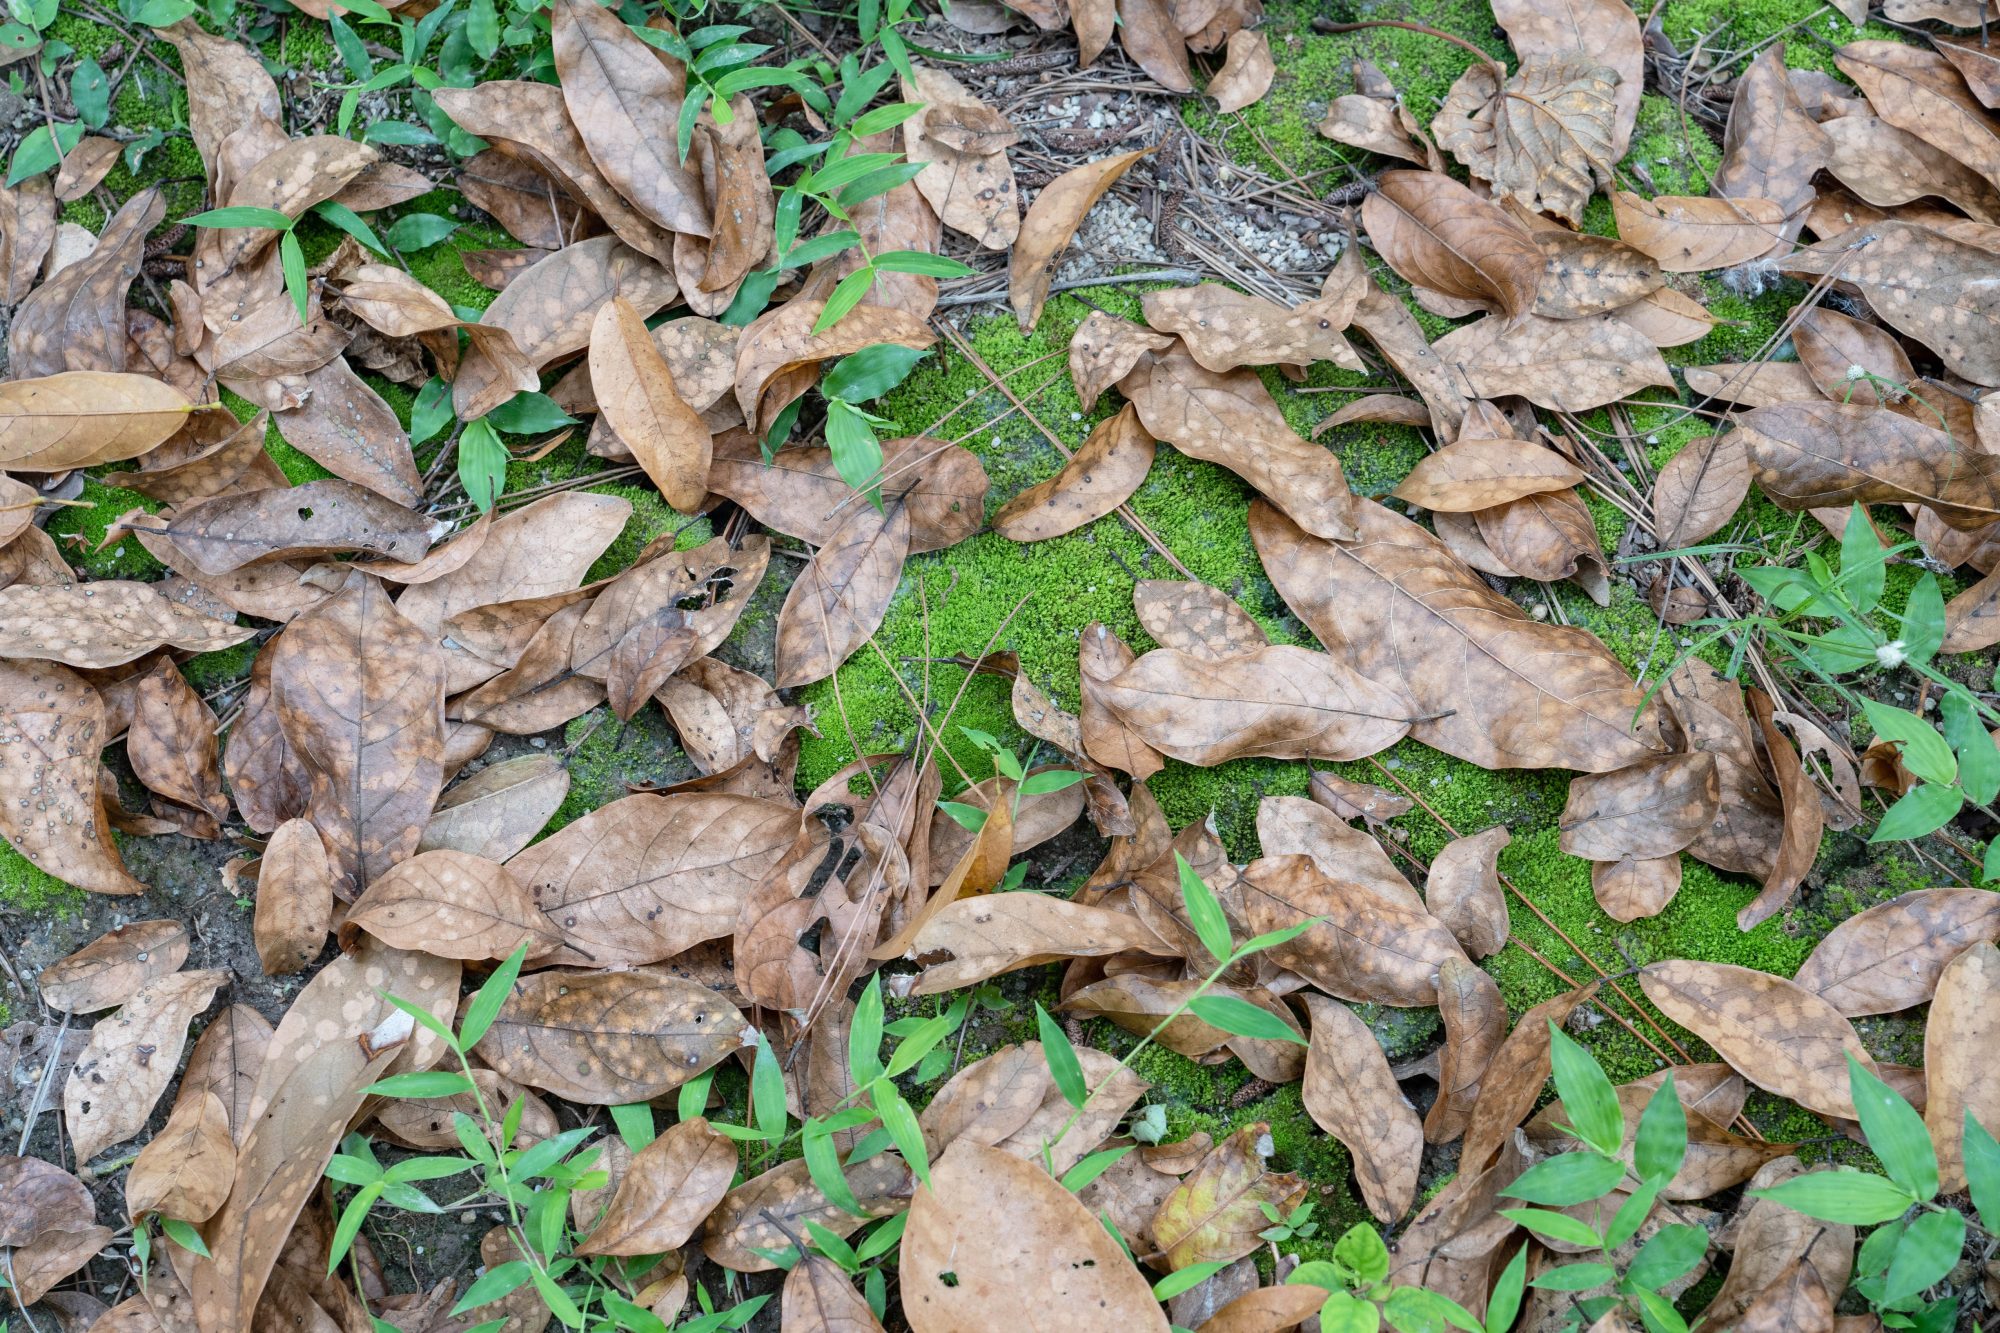 Saiyuen photos 10 leaf litter closeup